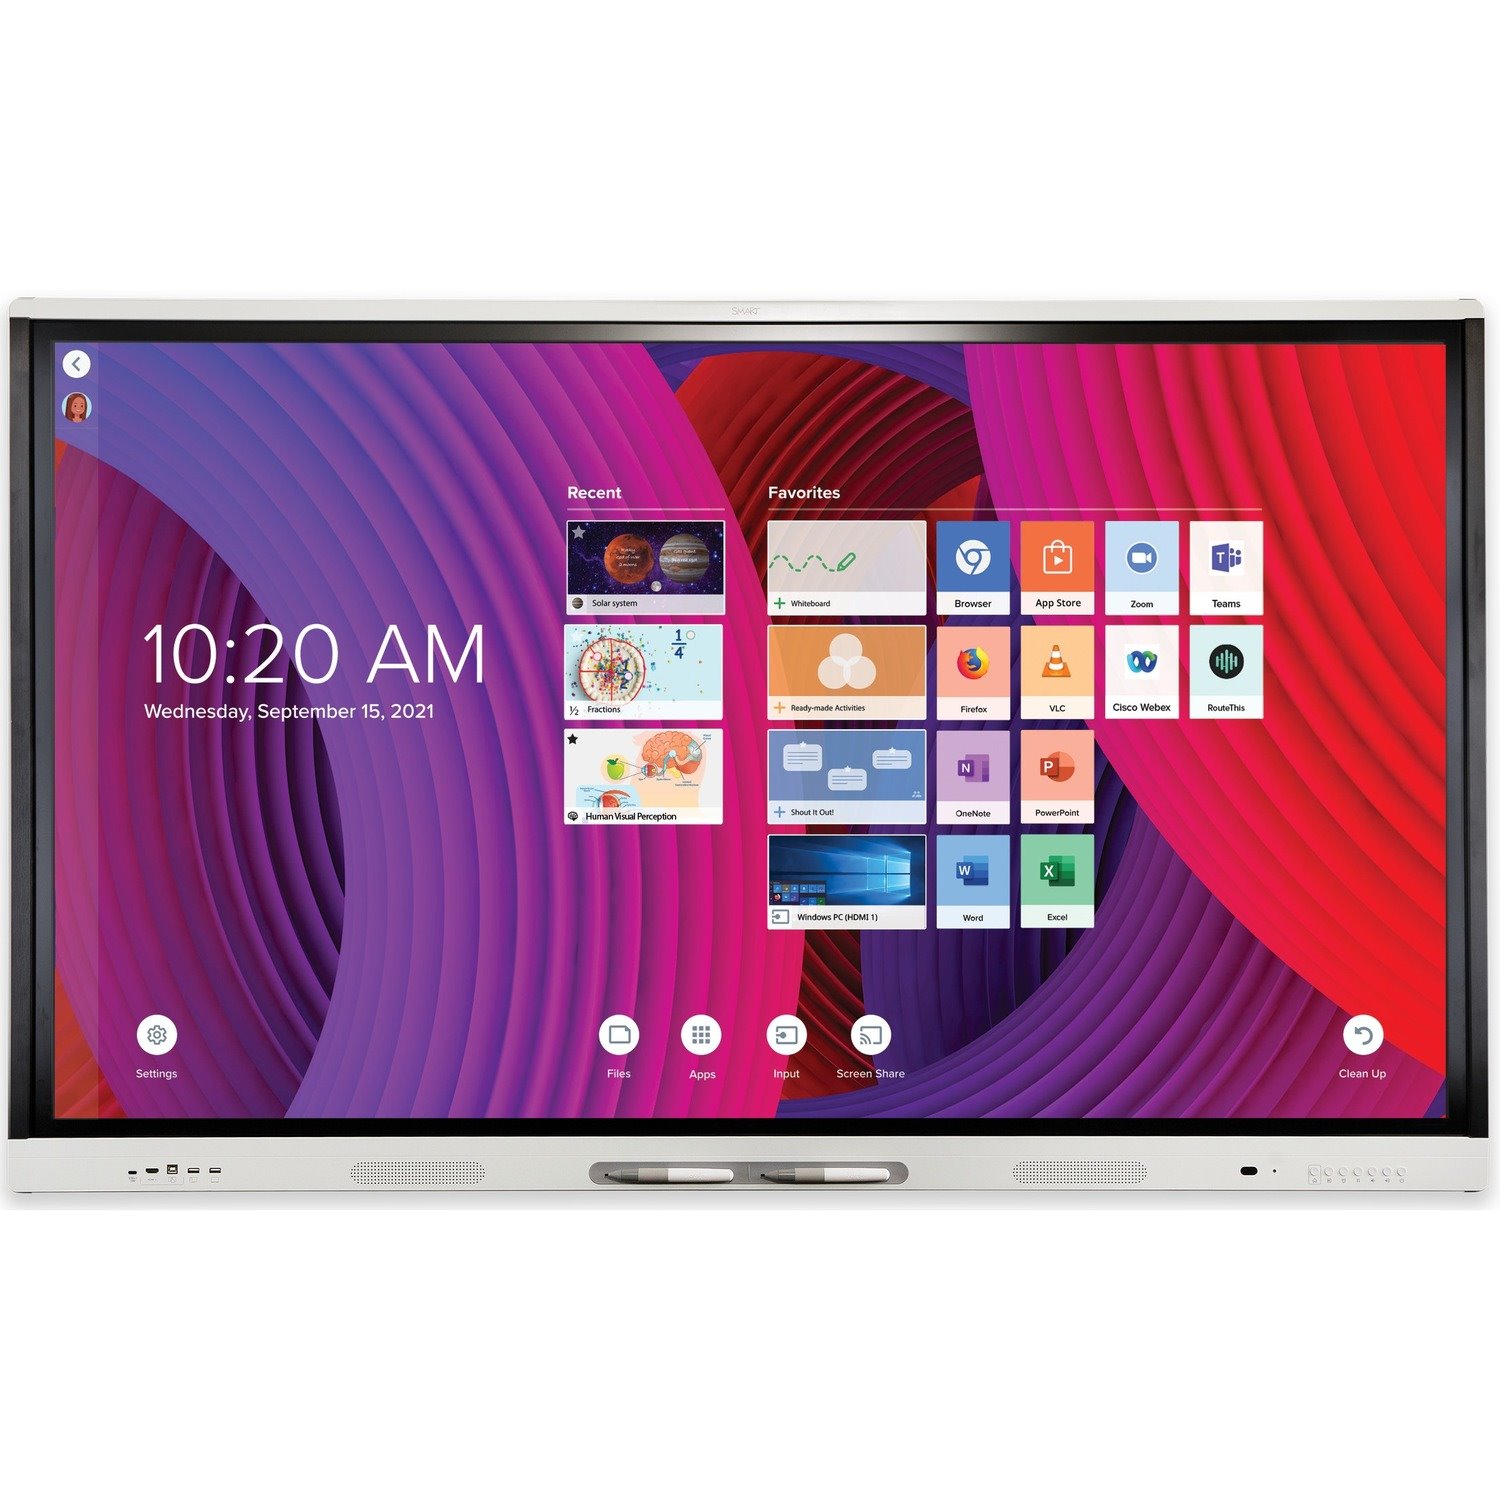 SMART Board SBID-MX255-V3 55" Class LCD Touchscreen Monitor - 16:9 - 8 ms